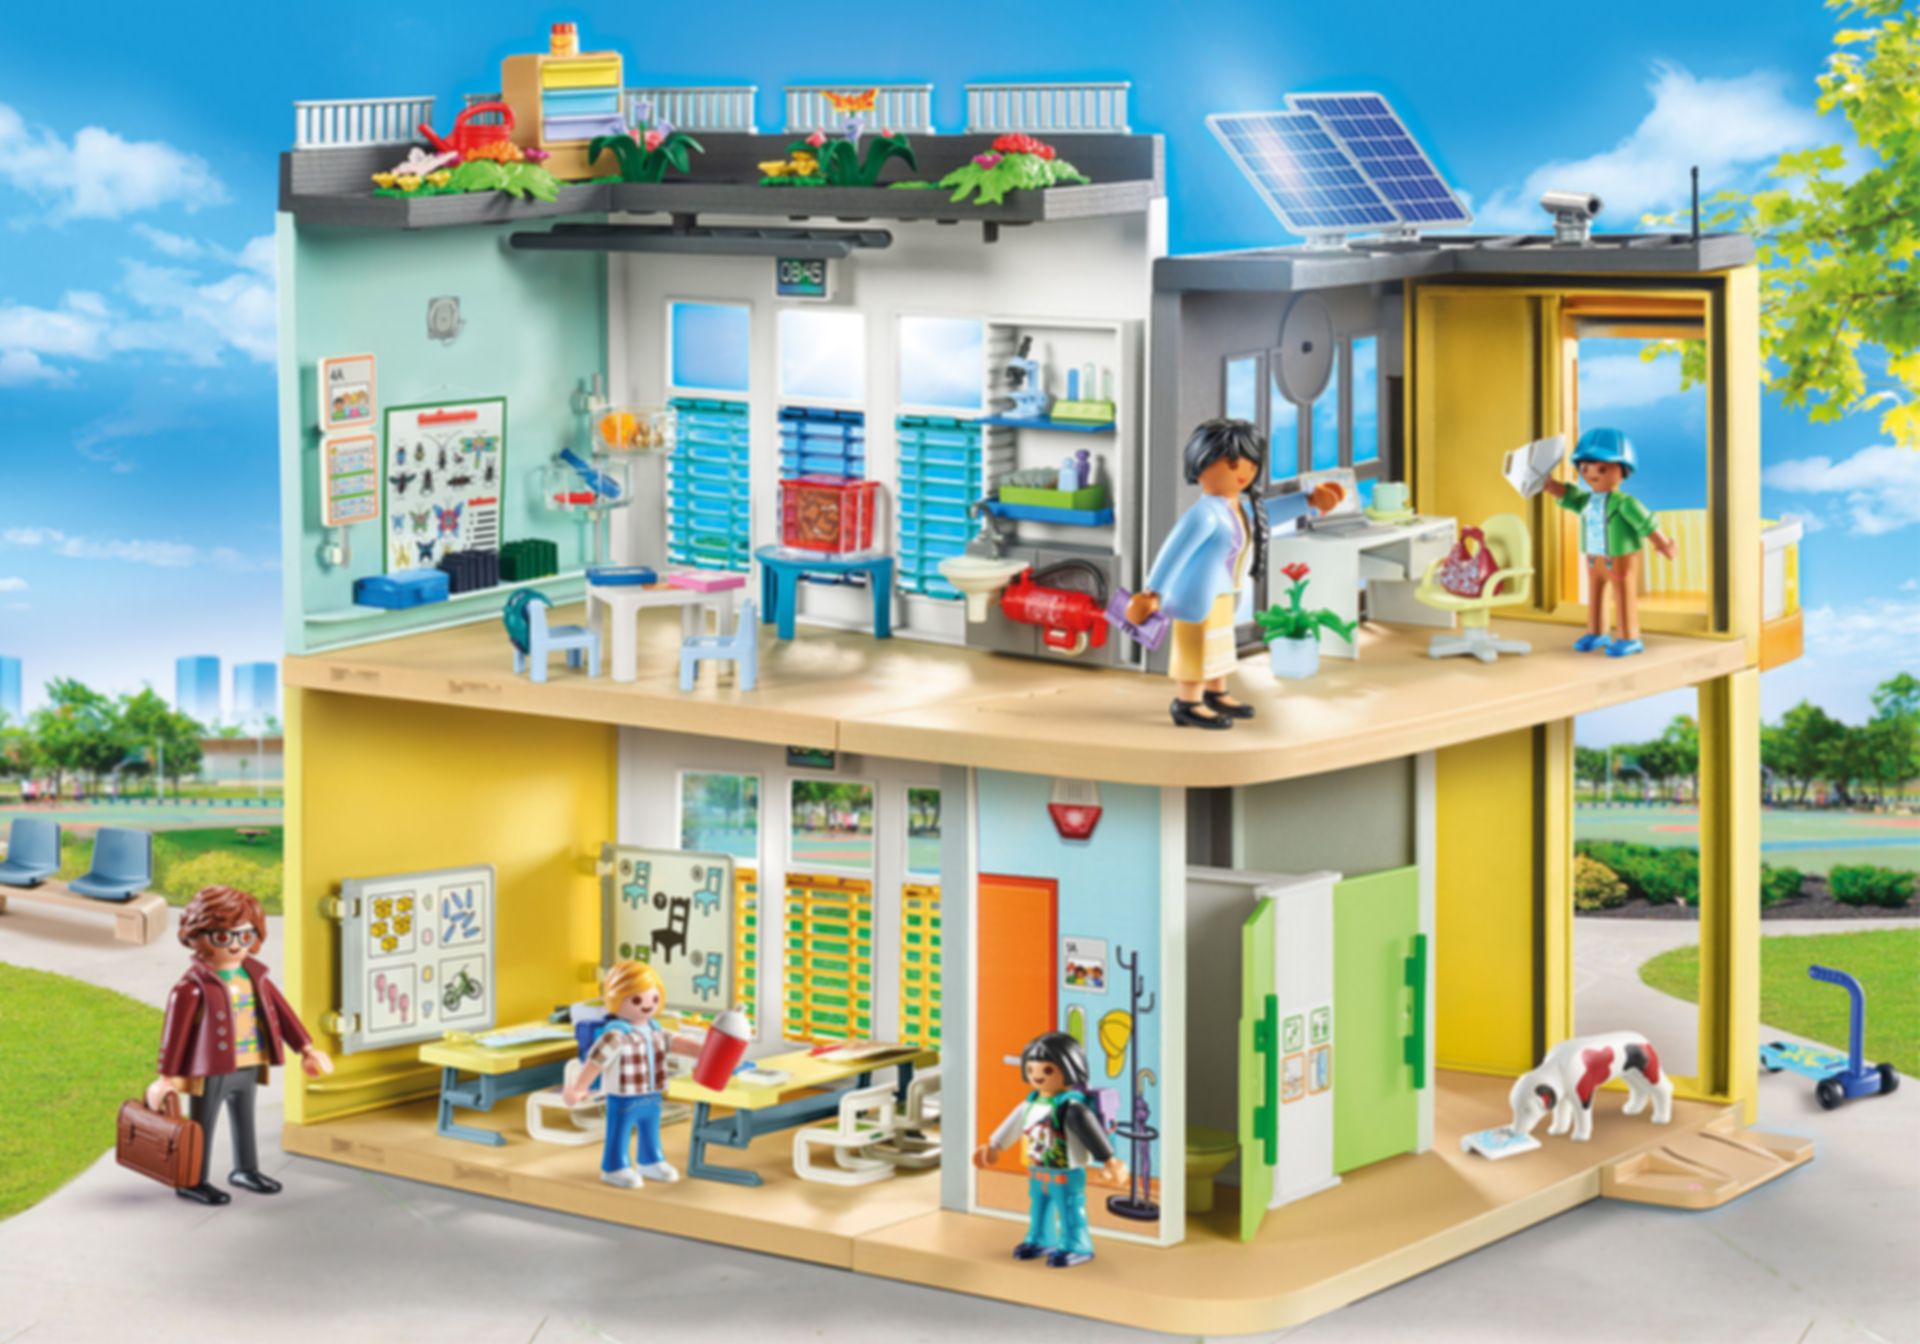 Playmobil® City Life Large School